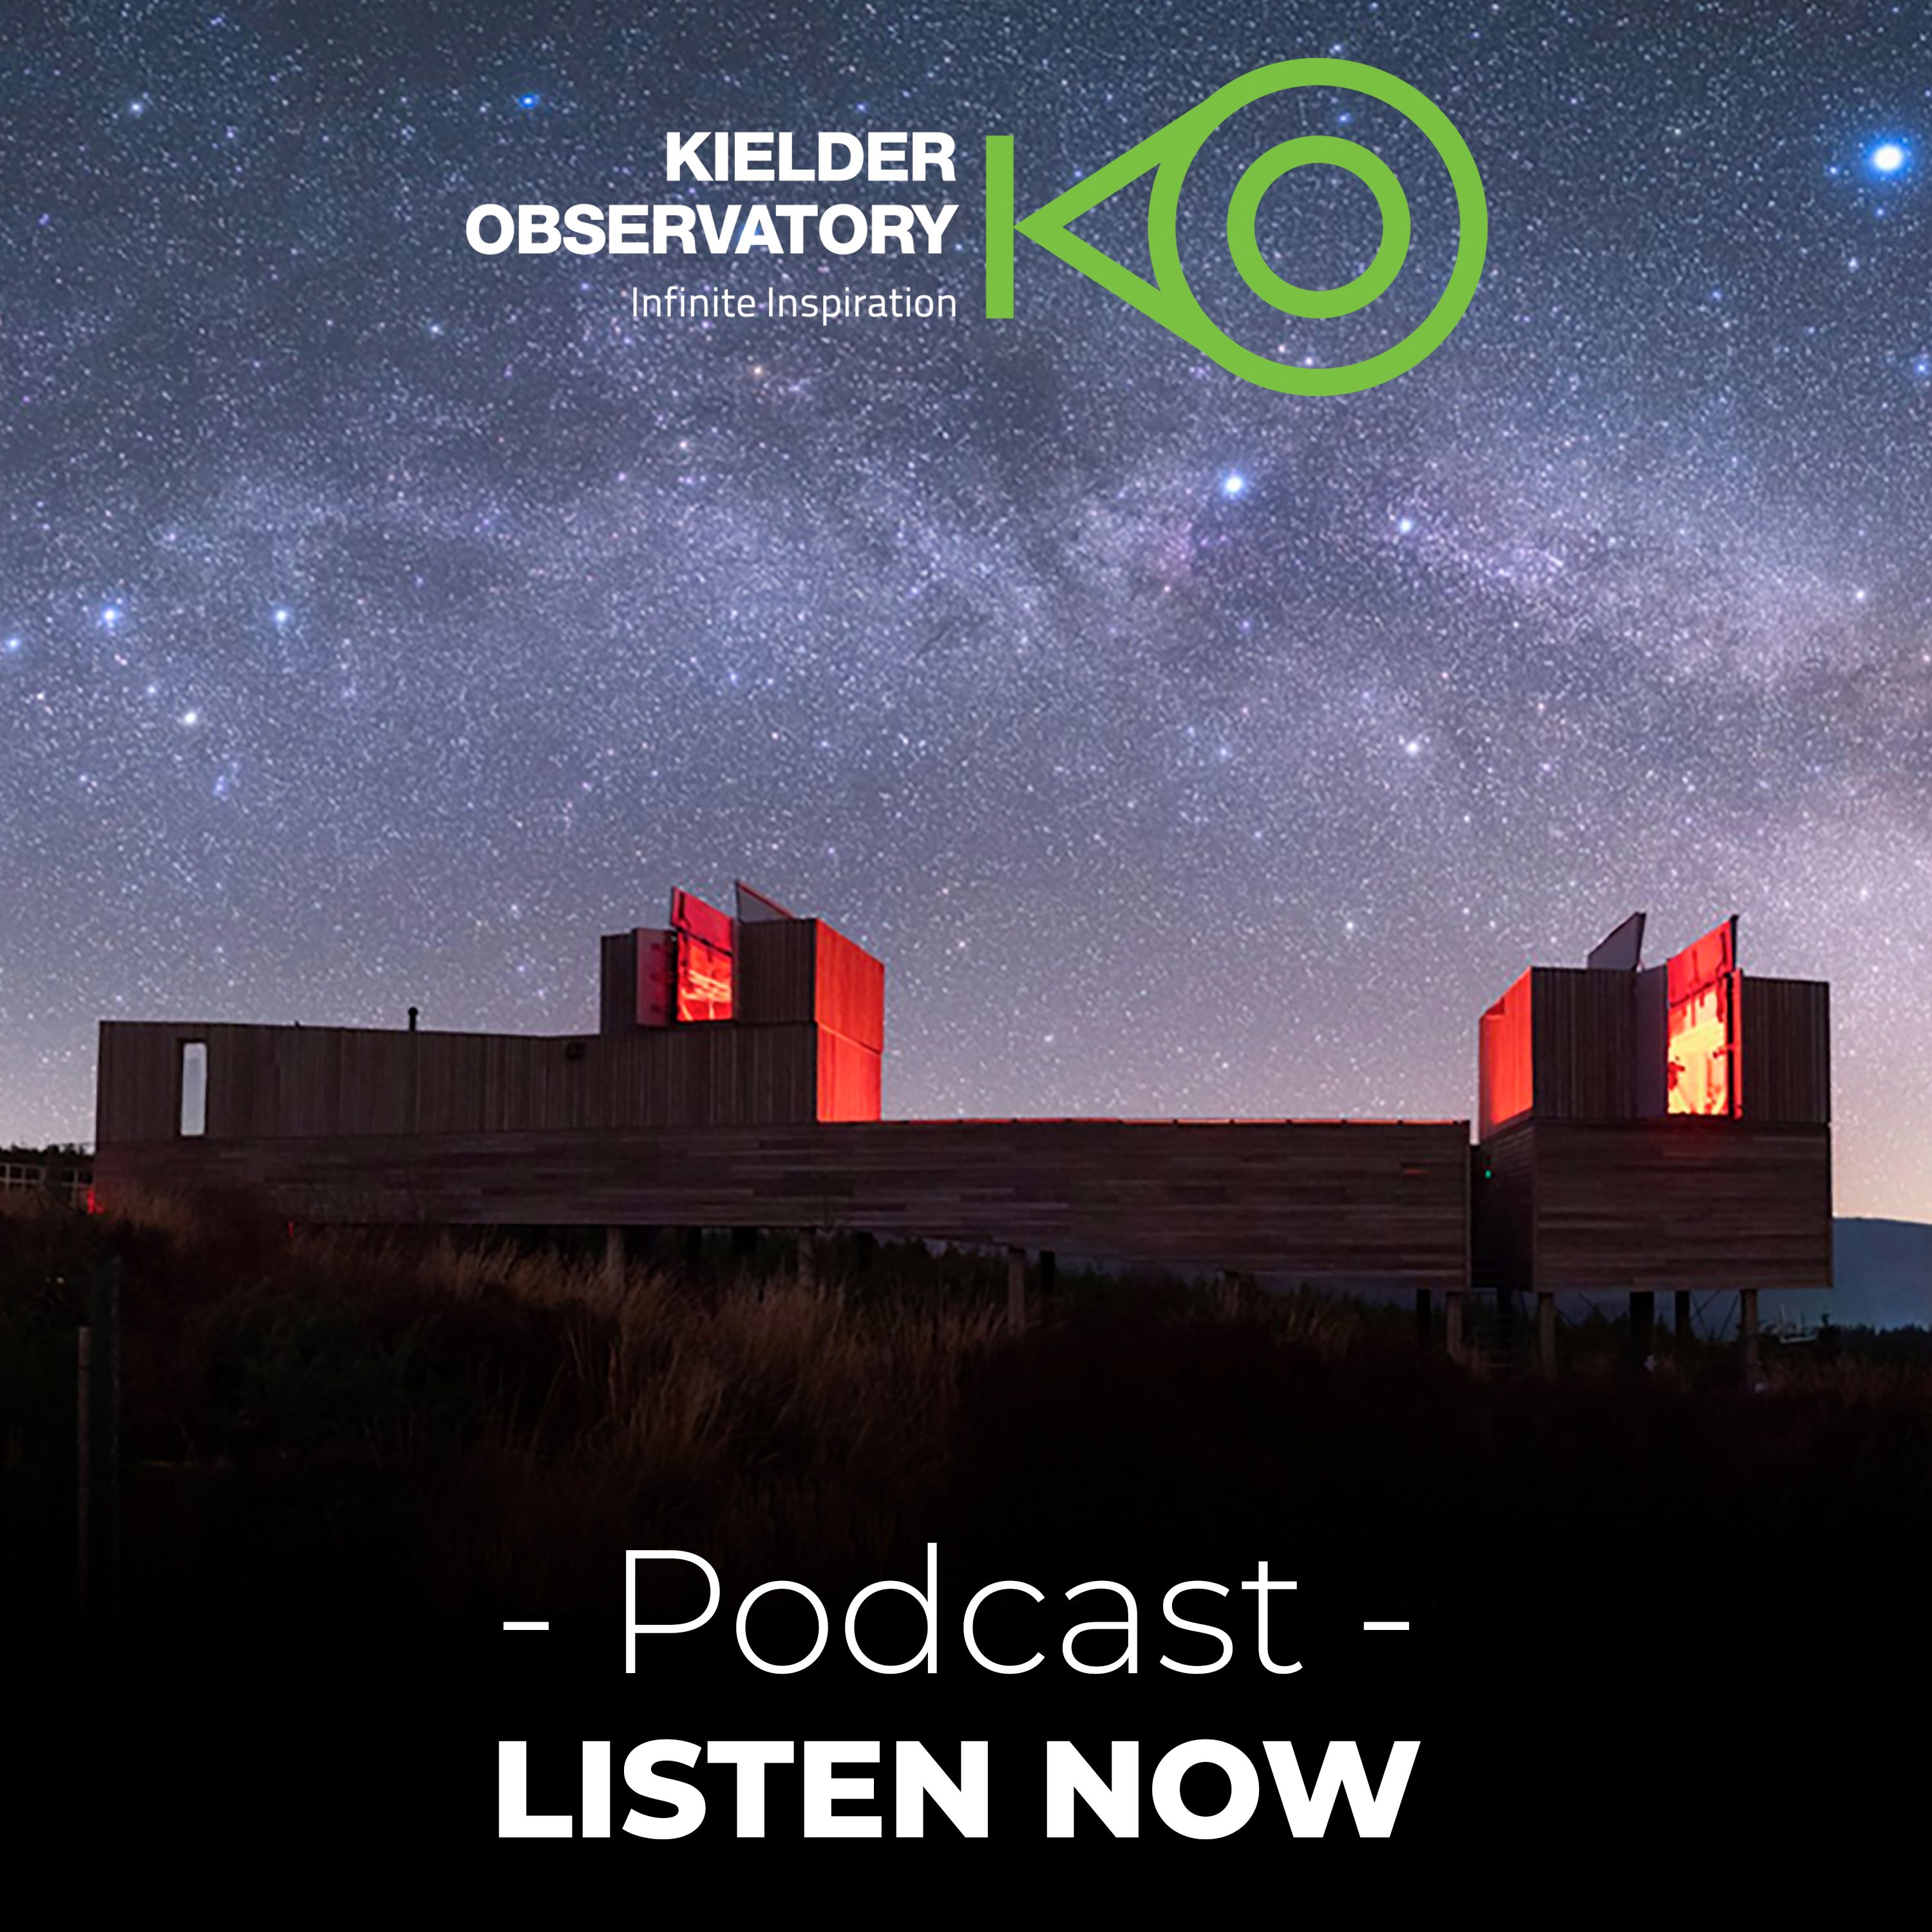 Radio Astronomy Comes To Kielder